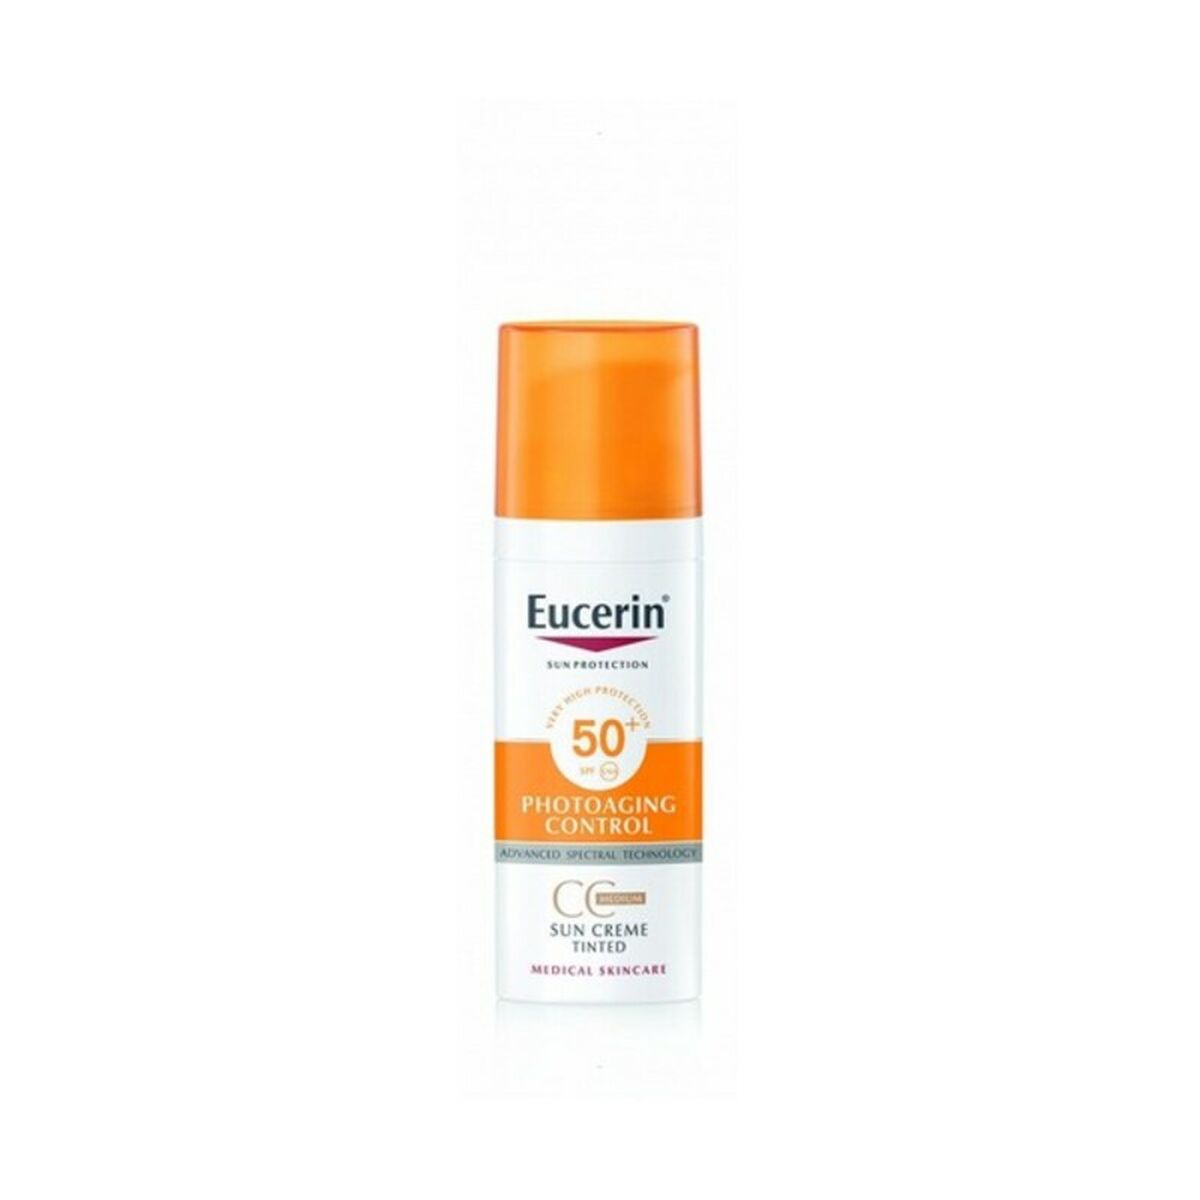 Facial Sun Cream Photoaging Control Eucerin Photoaging Control Age Spf 50+ (50 ml) Spf 50 50 ml-0